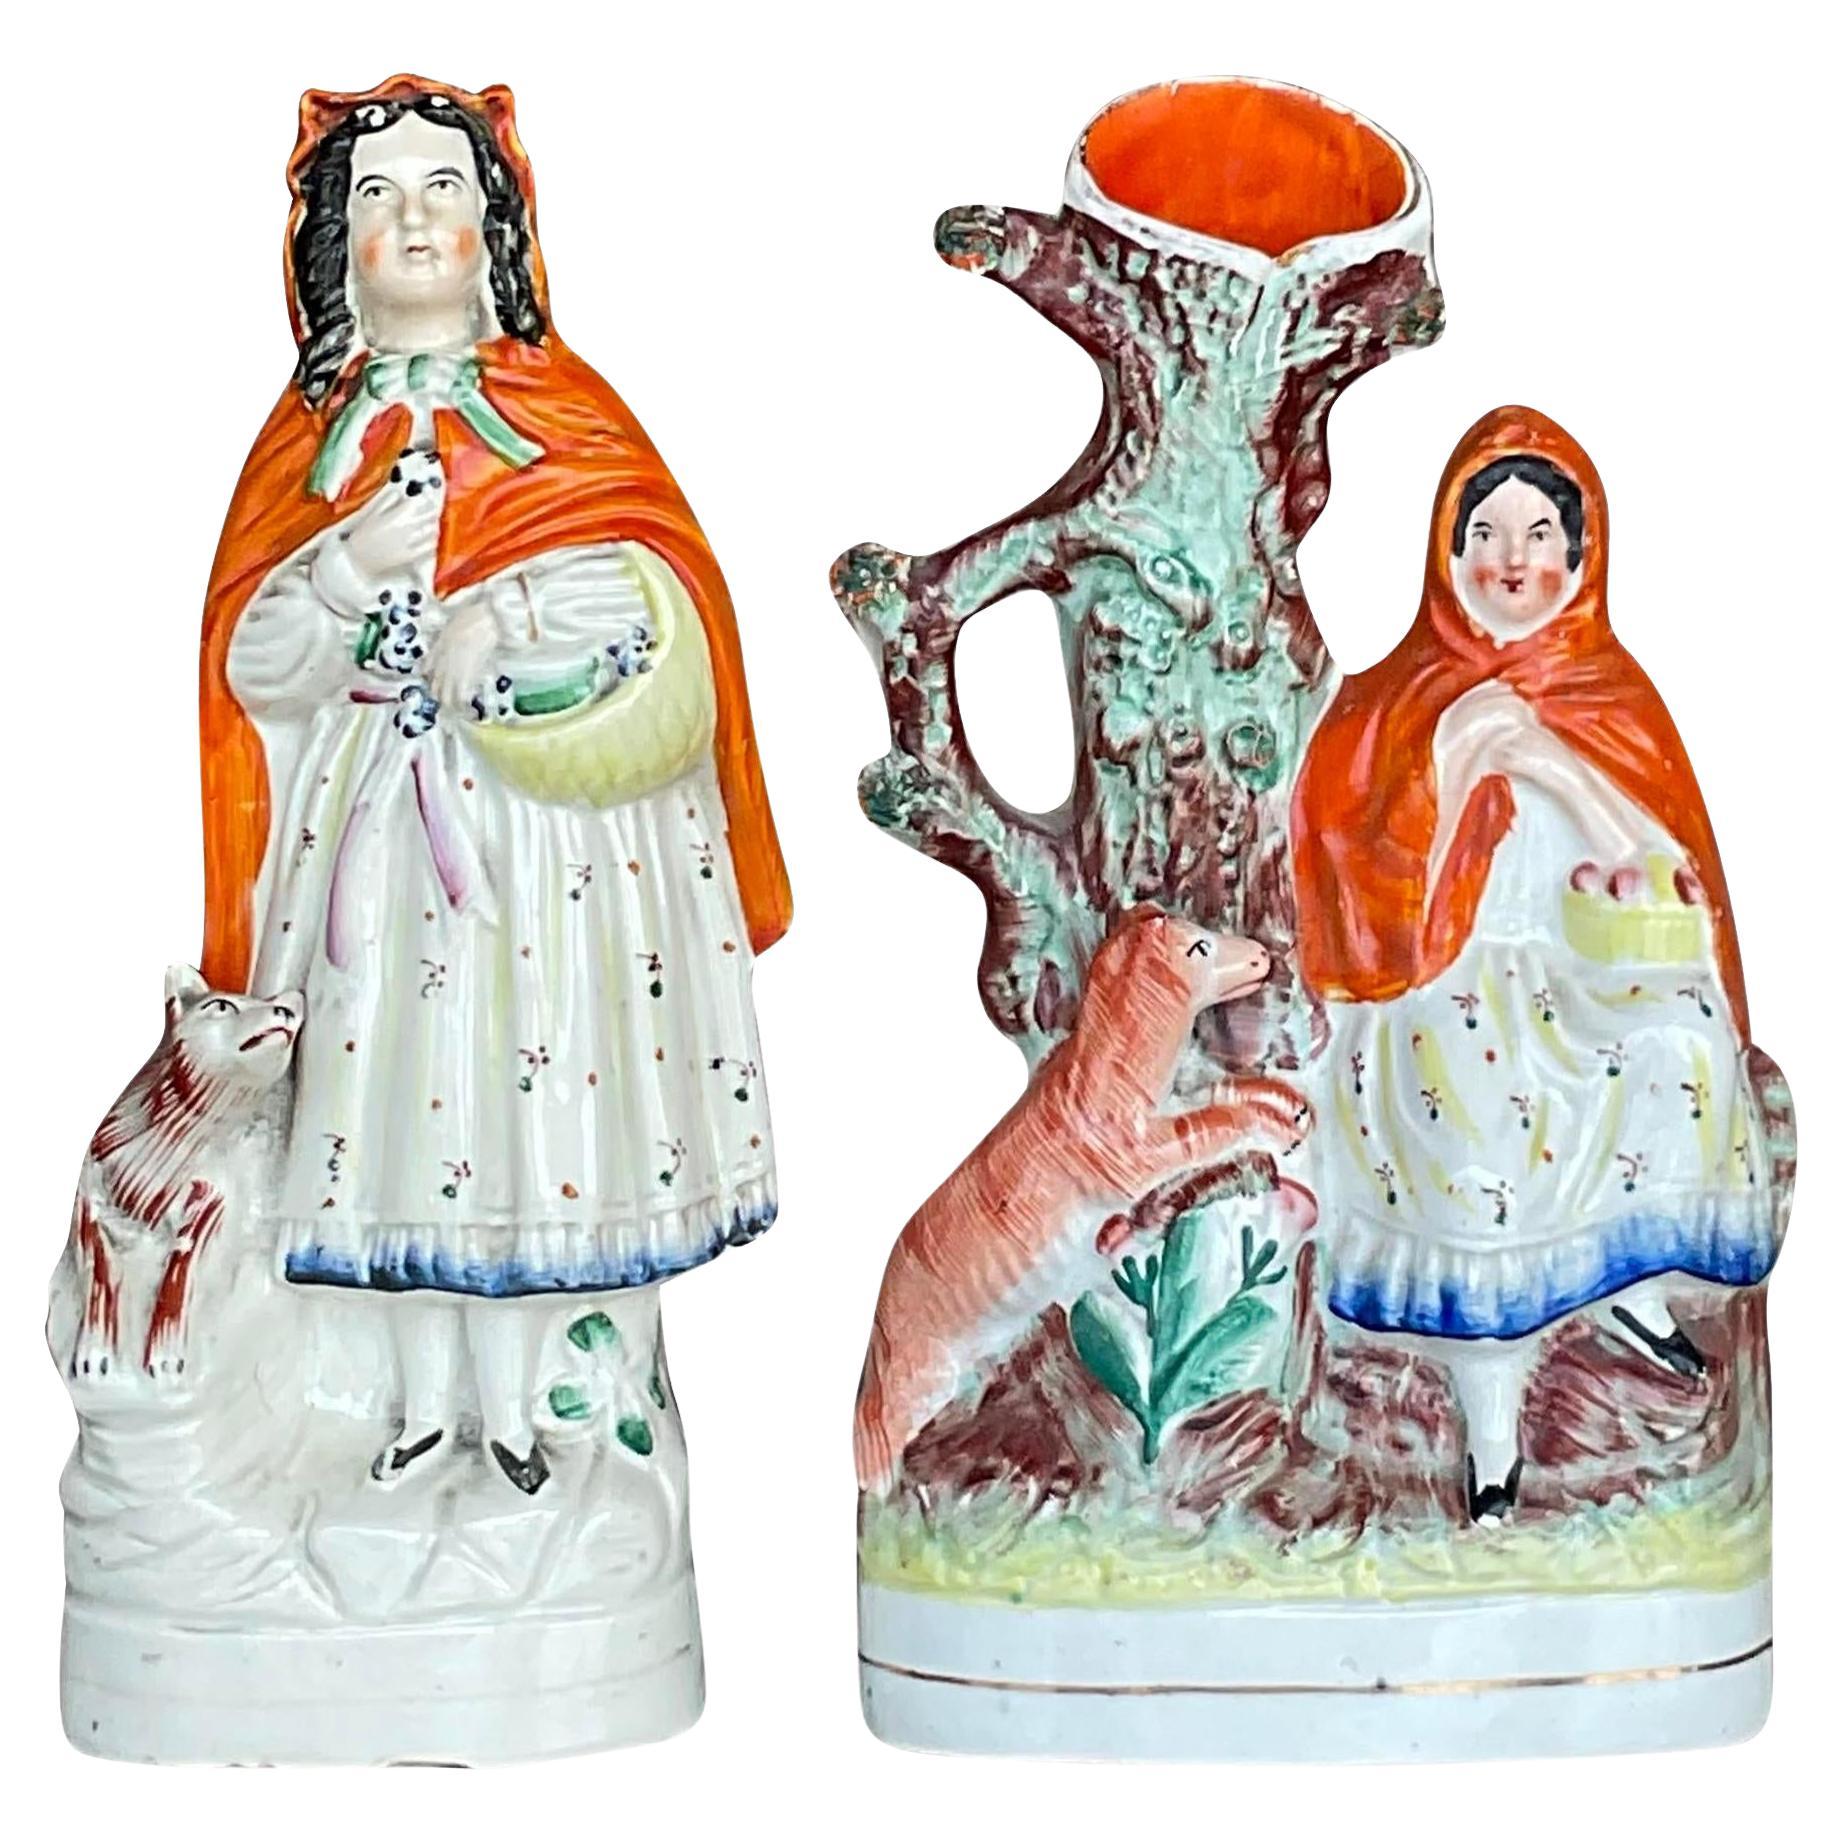 Vintage Regency Staffordshire Style Figurines - Set of 2